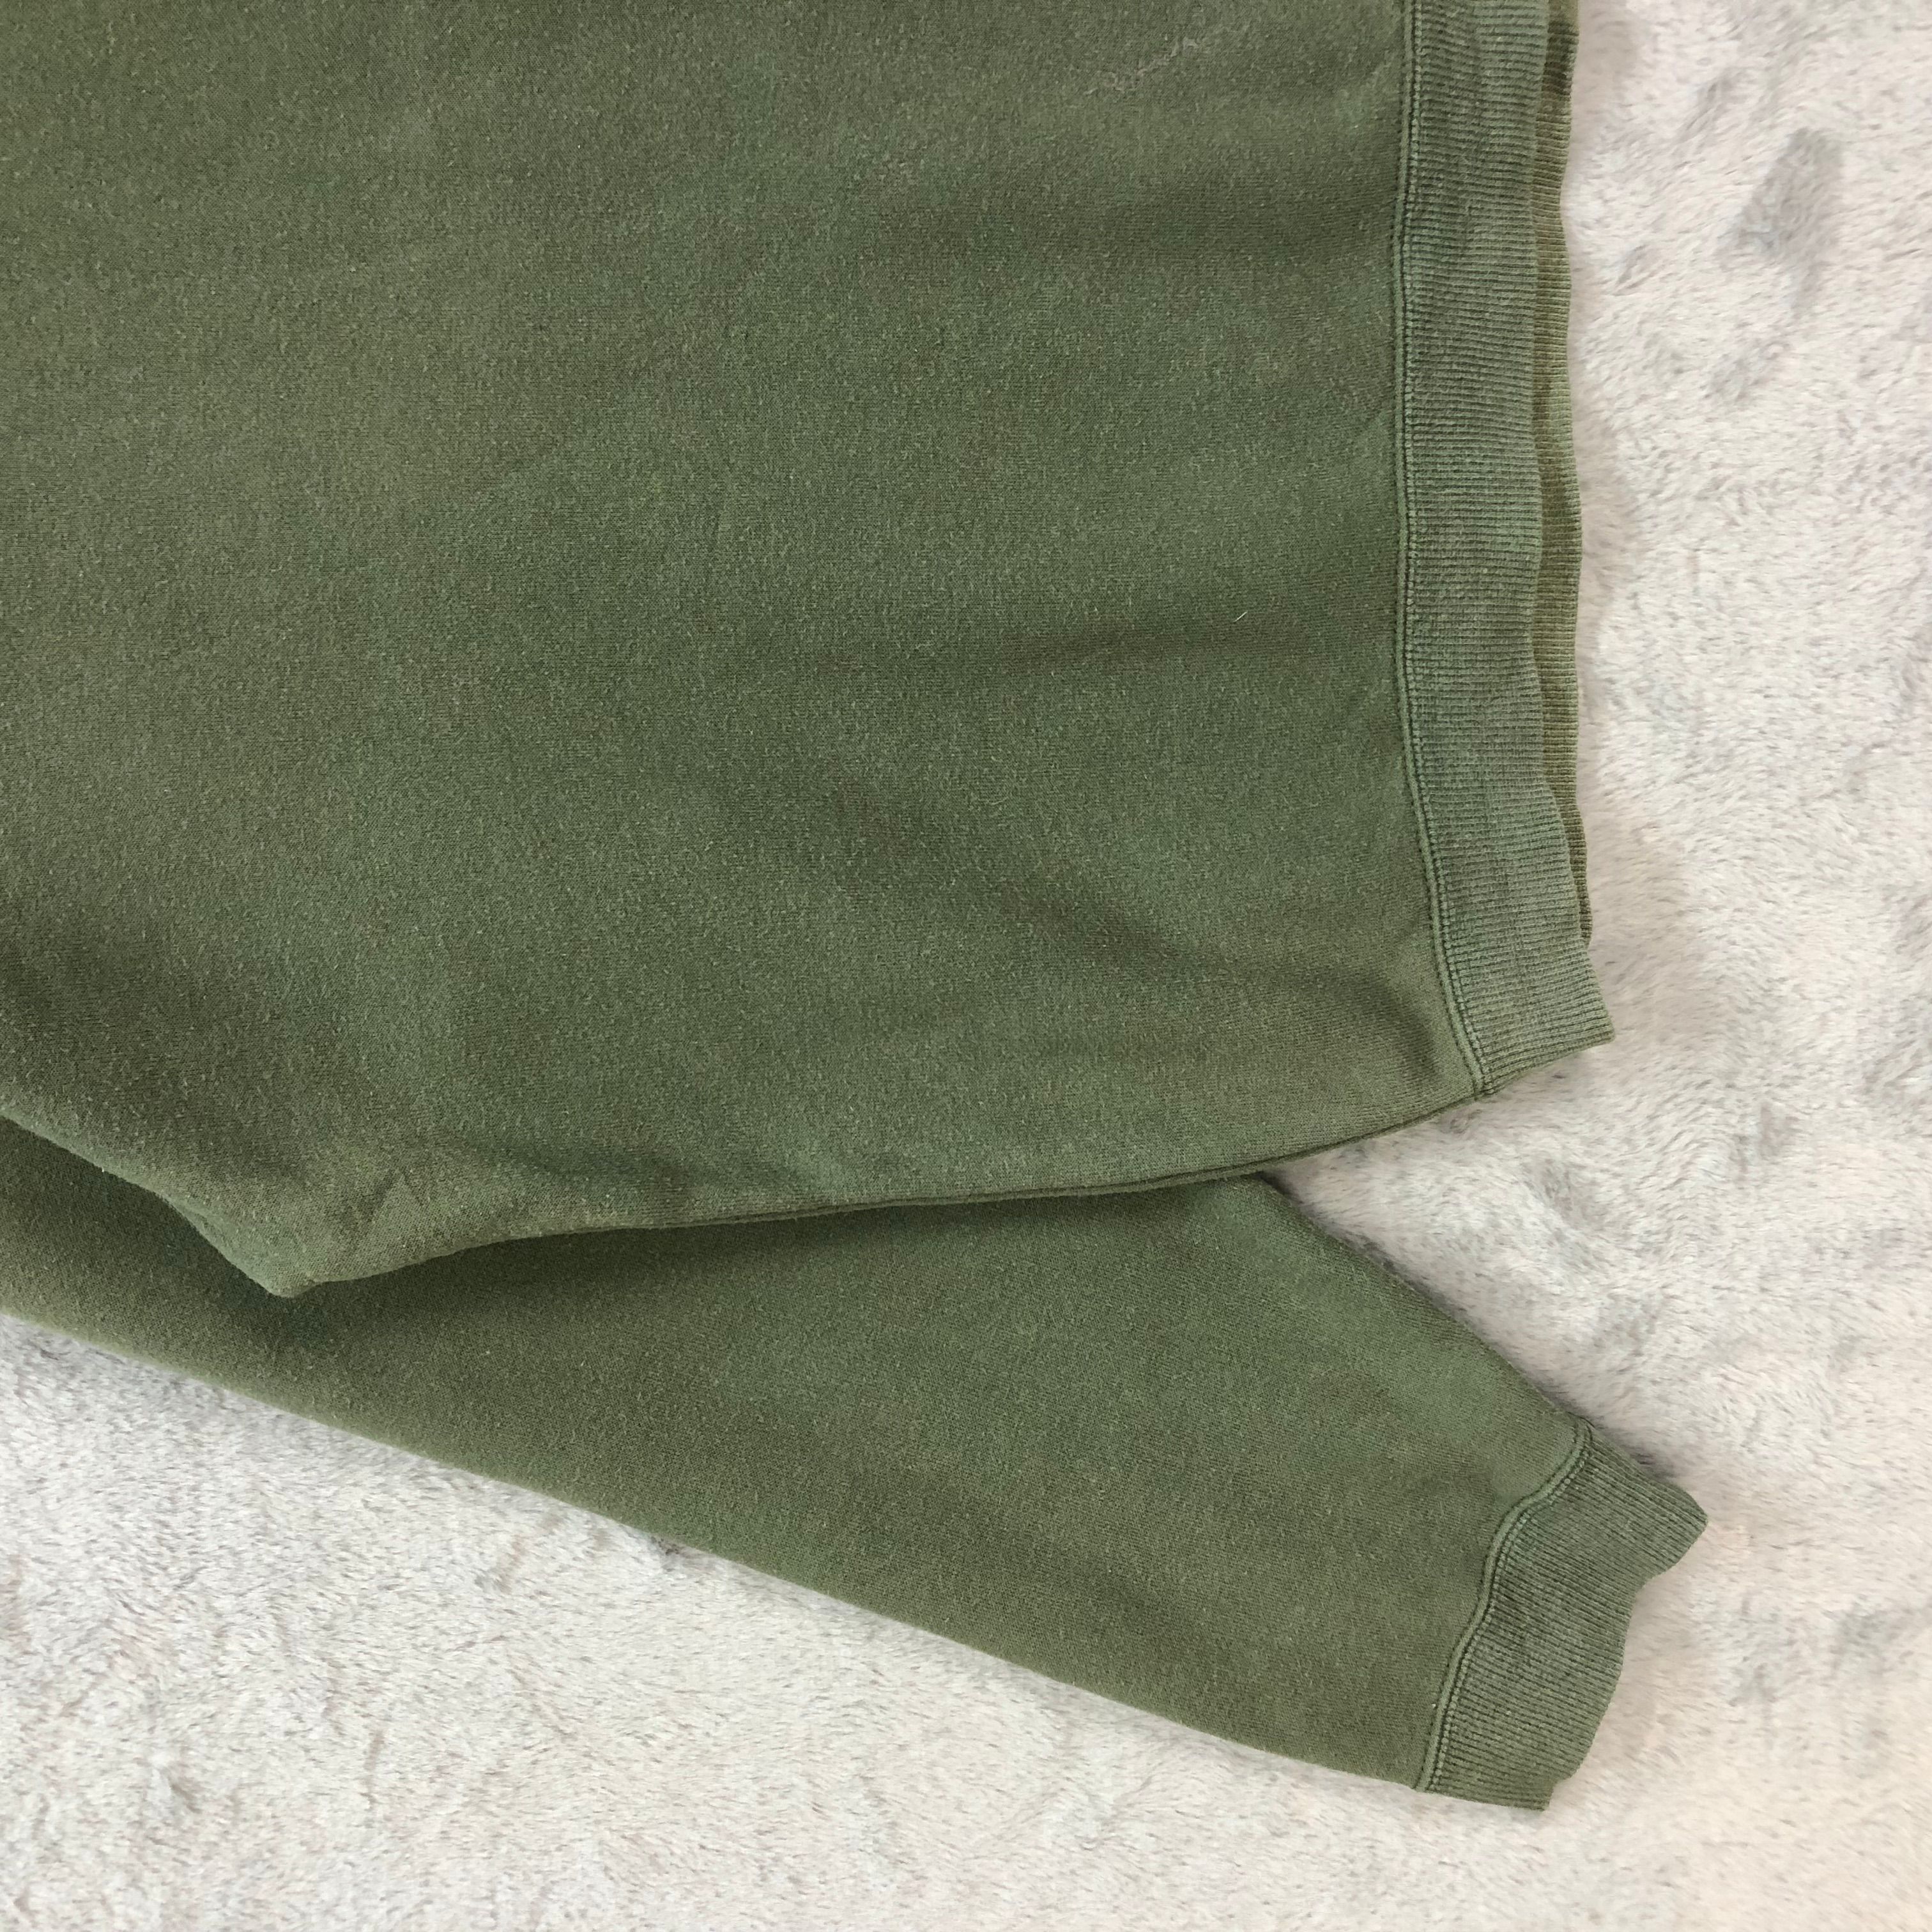 TNF Army Green Sweatshirts #6441-67 - 5